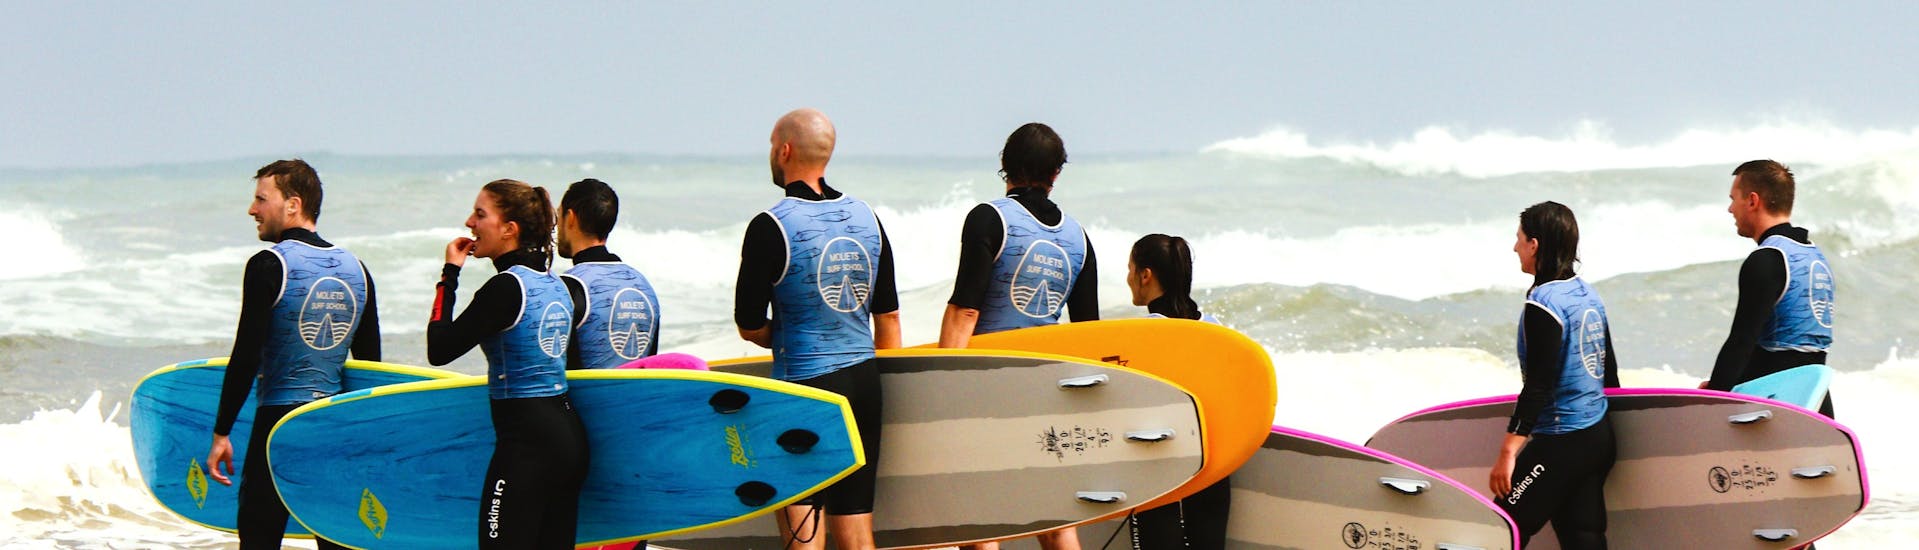 Lezioni di surf a Moliets-et-Maâ da 6 anni per tutti i livelli.